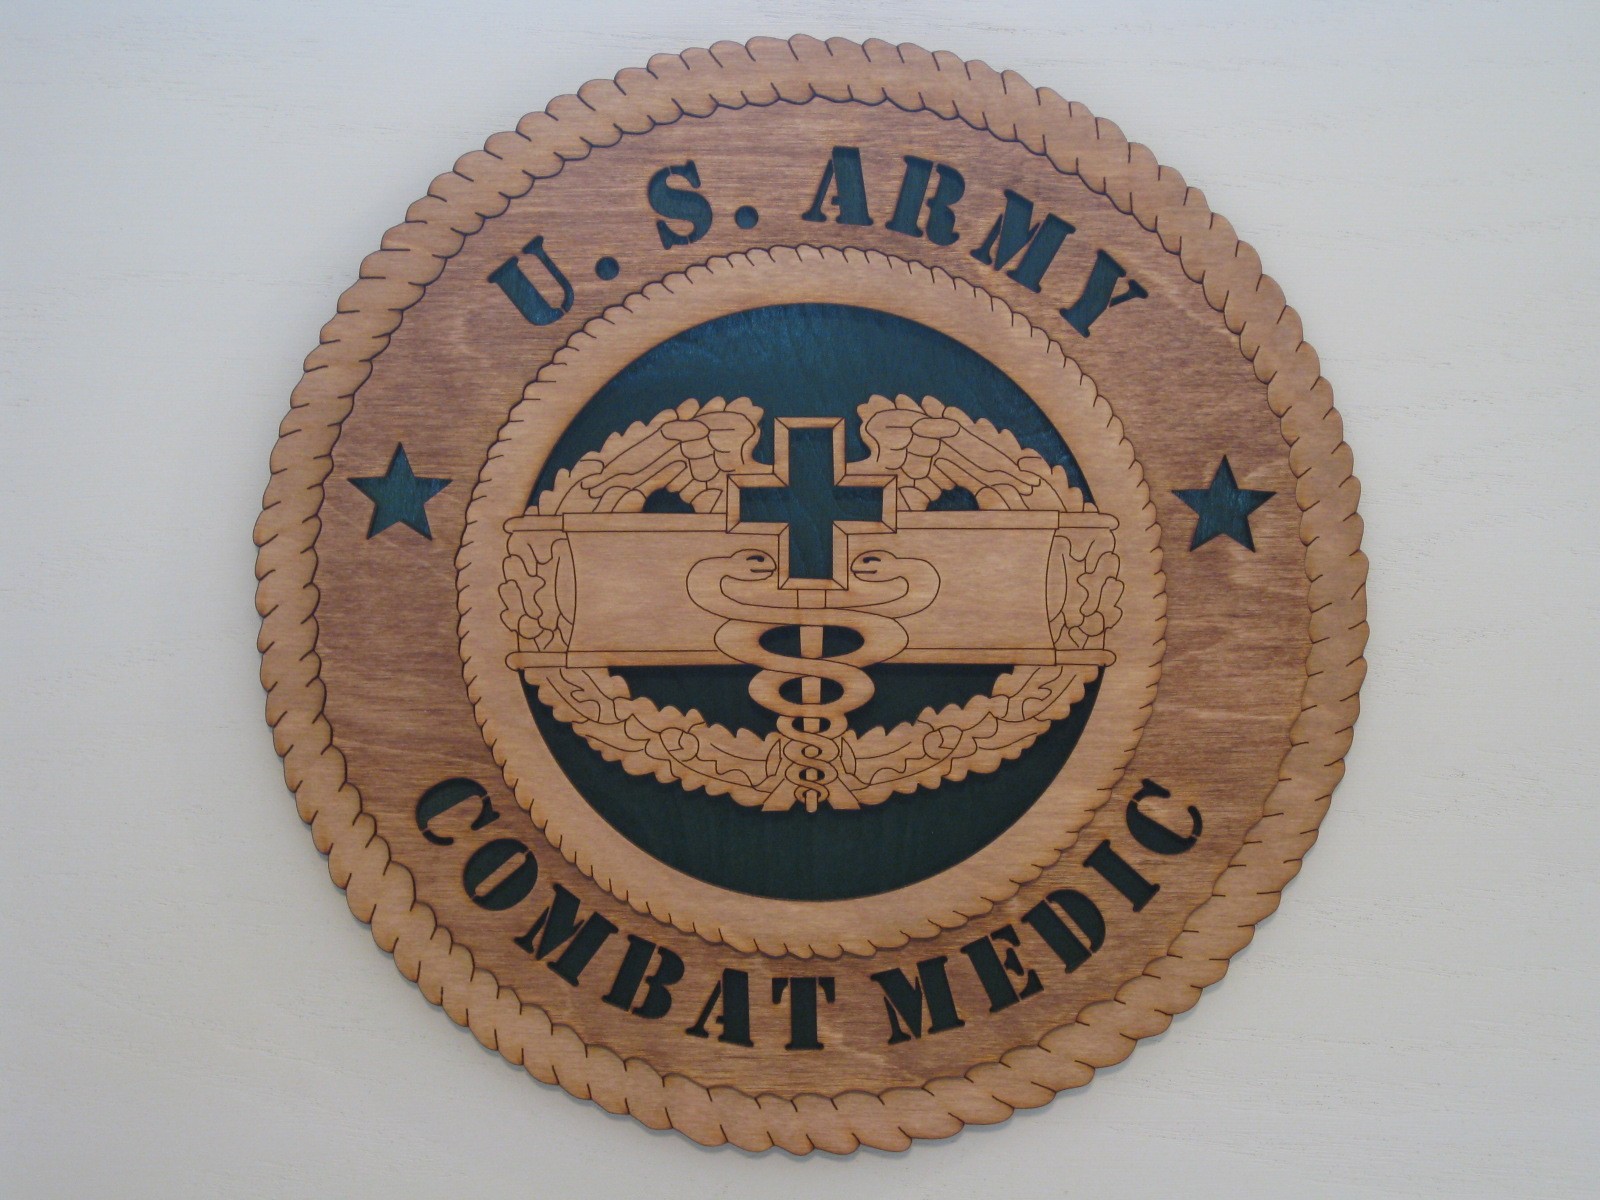 US Army Combat Medic. Mick's Military Shop